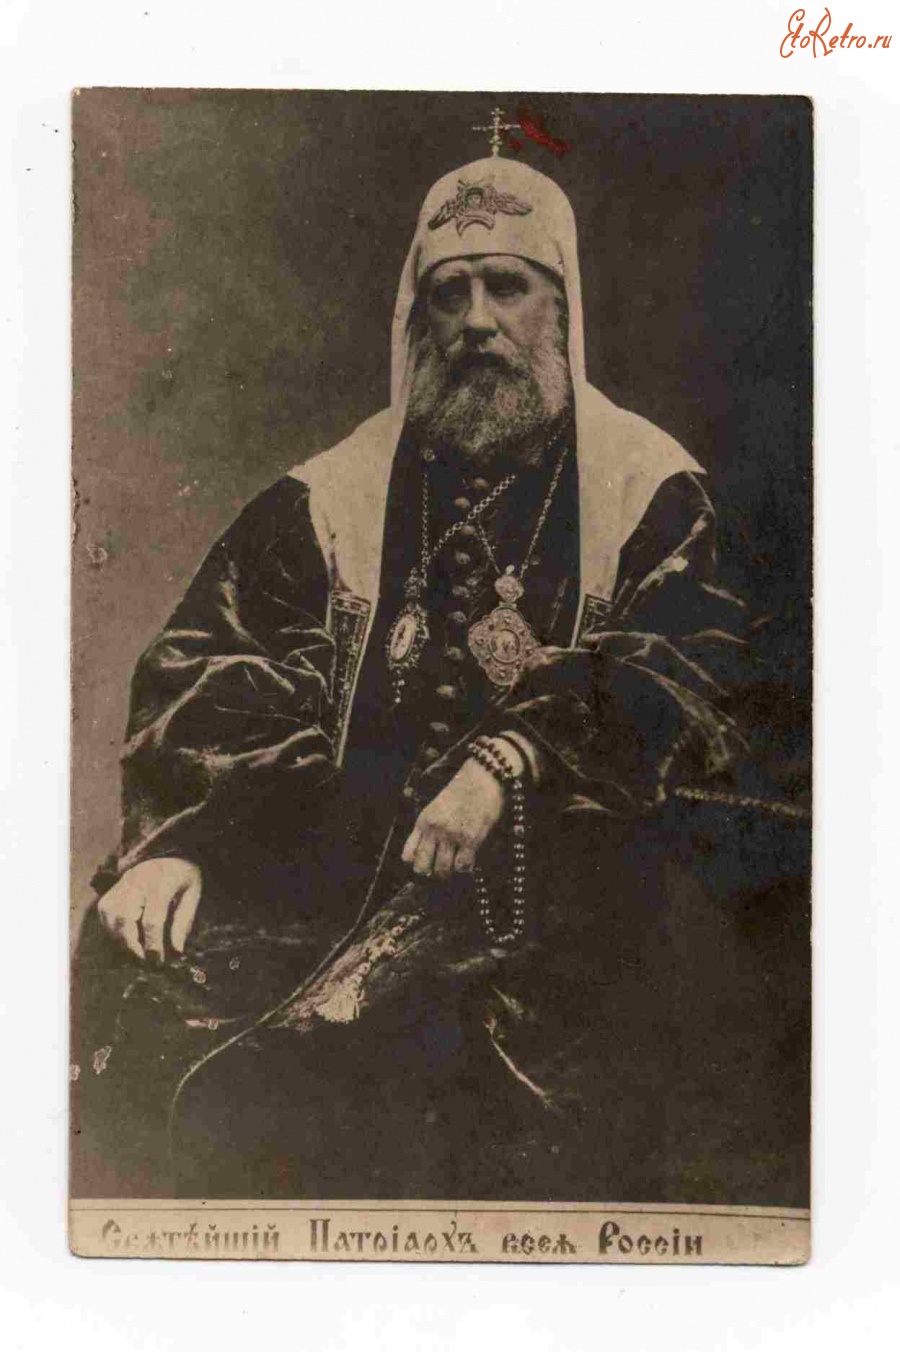 Ретро знаменитости - Святейший патриарх В.Р.Тихон.